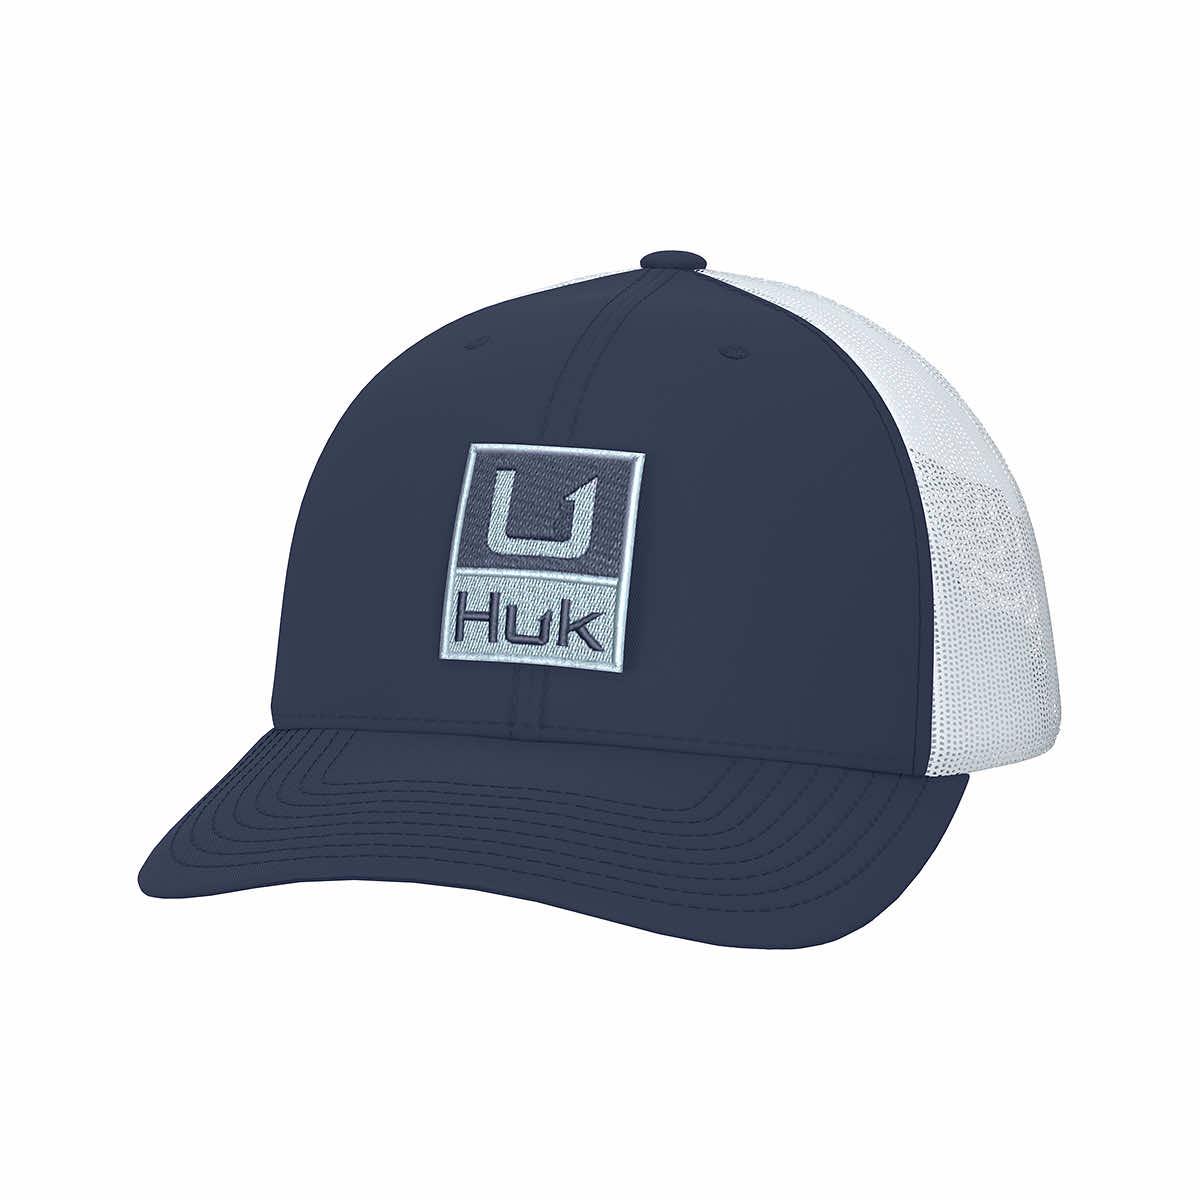 Huk Fishing Hat - Shop on Pinterest